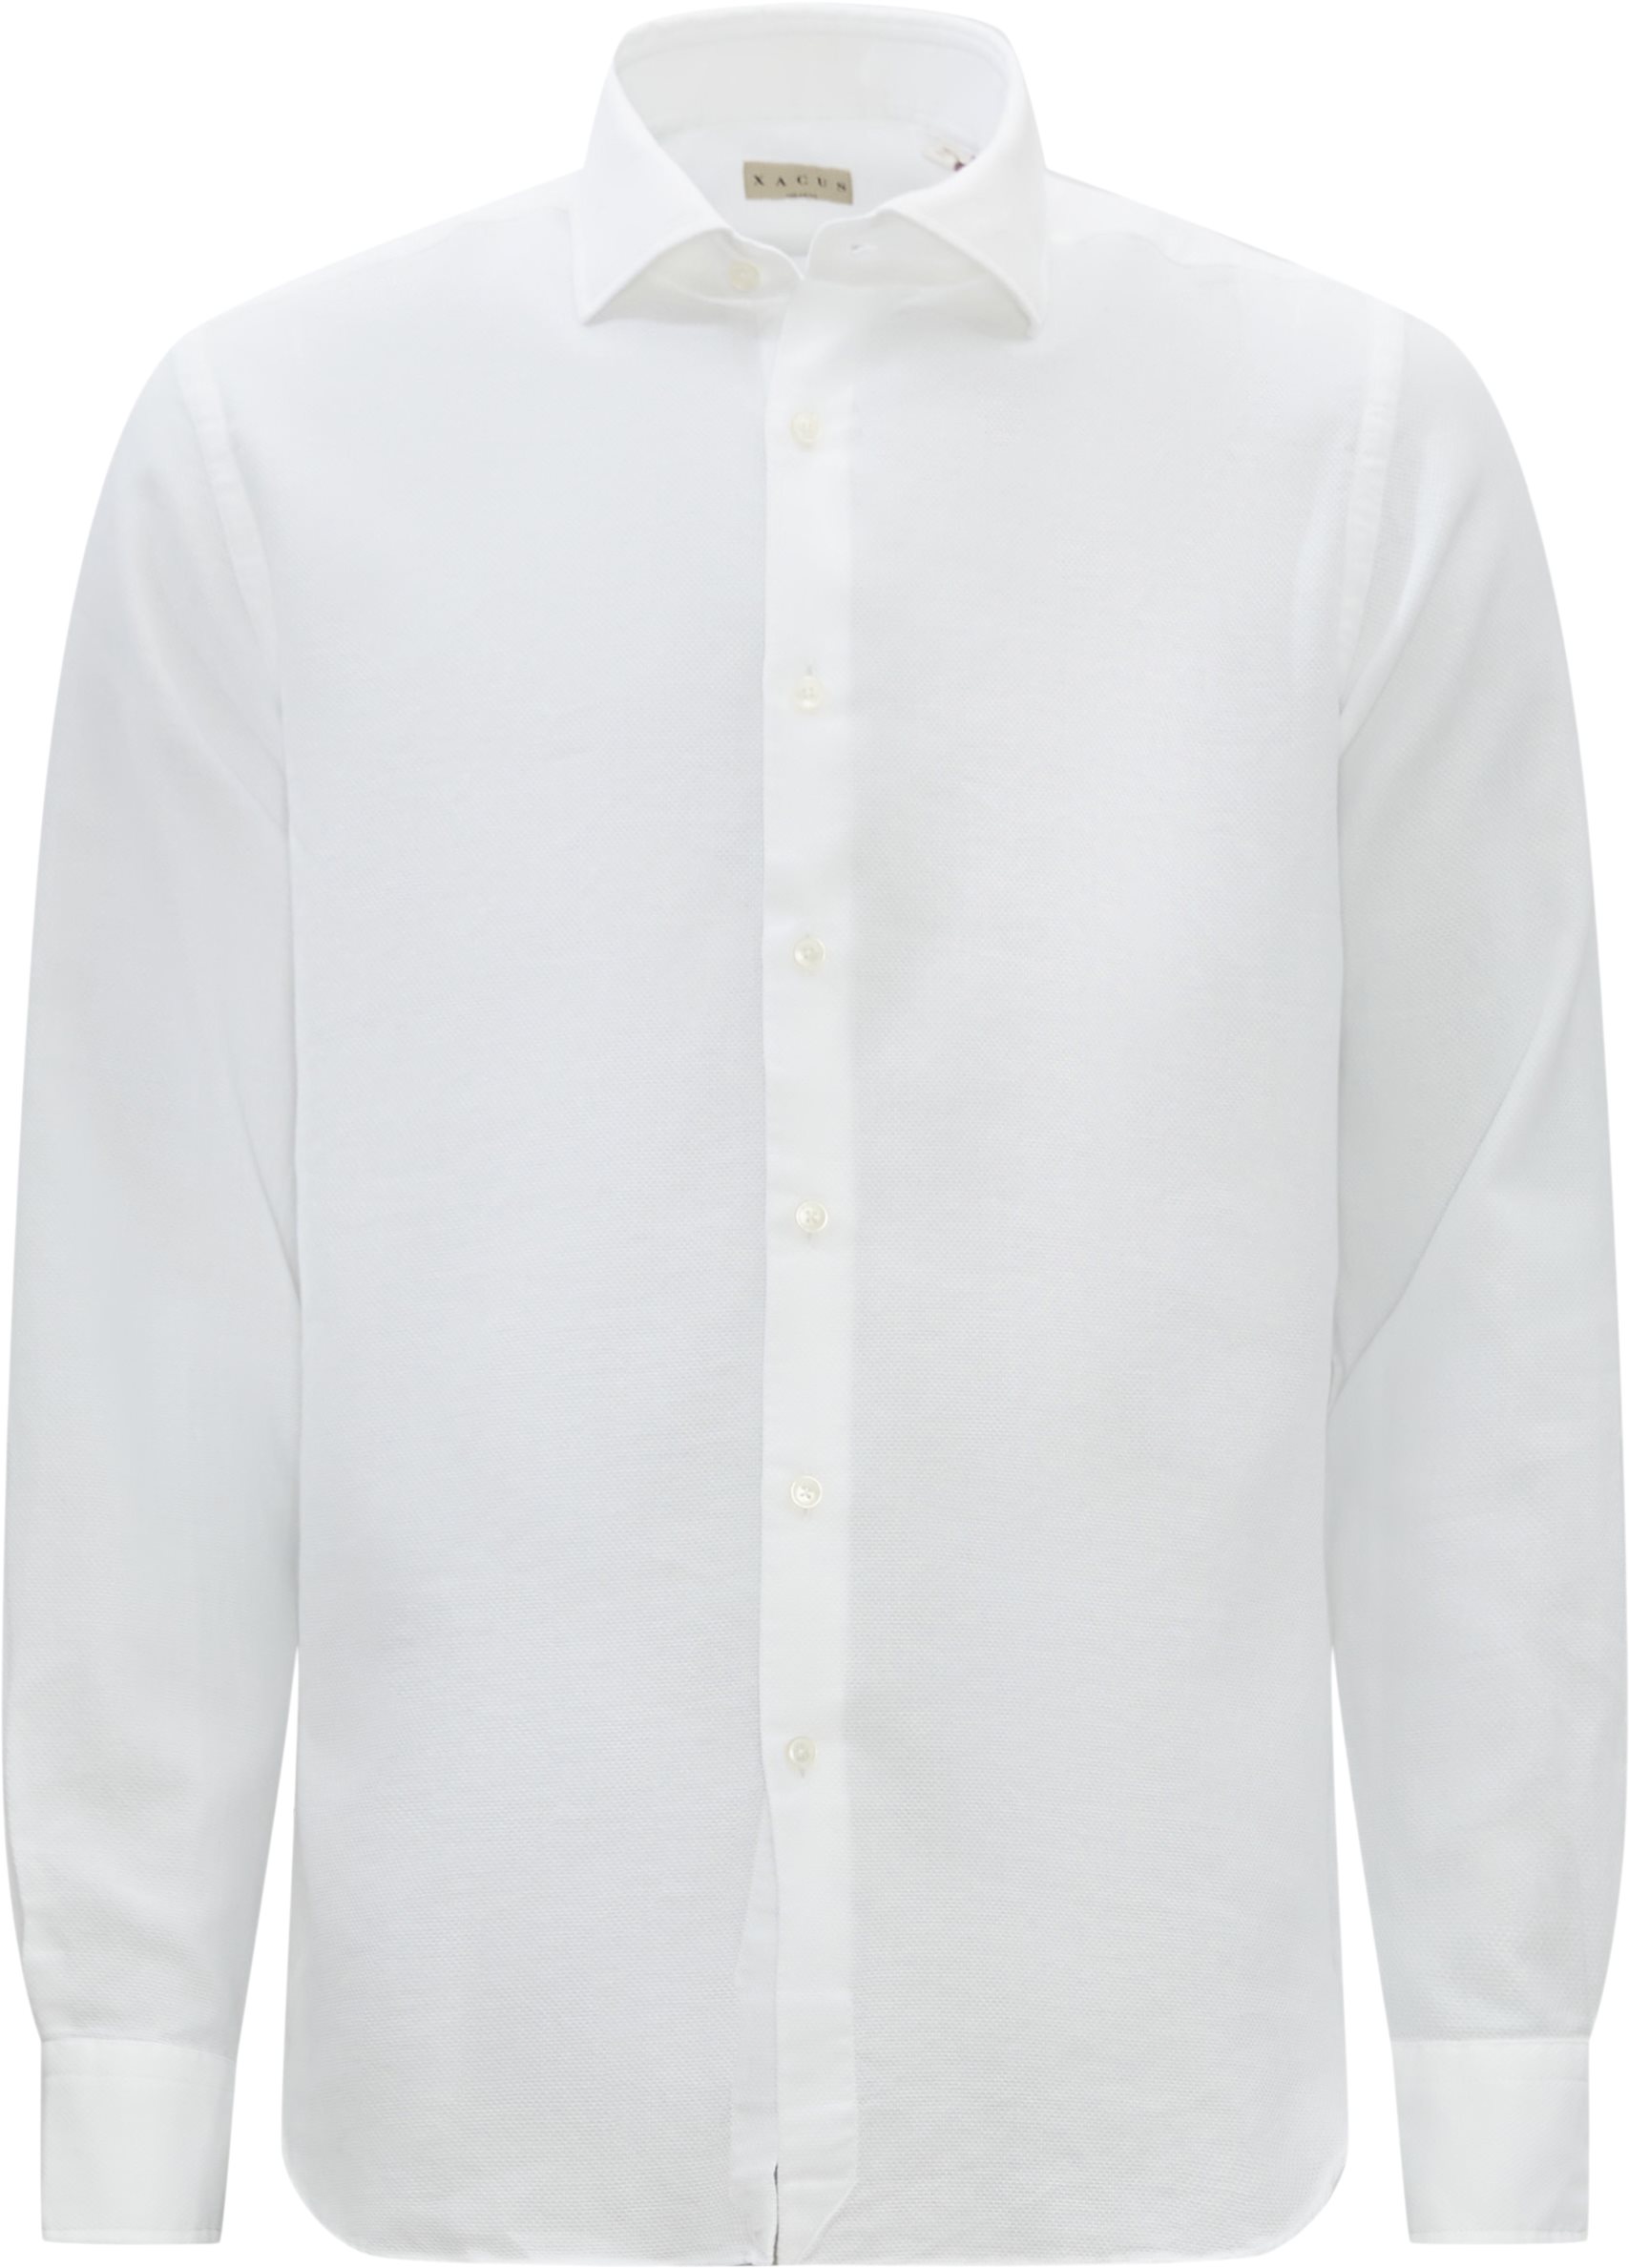 Xacus Shirts 41401 748 White